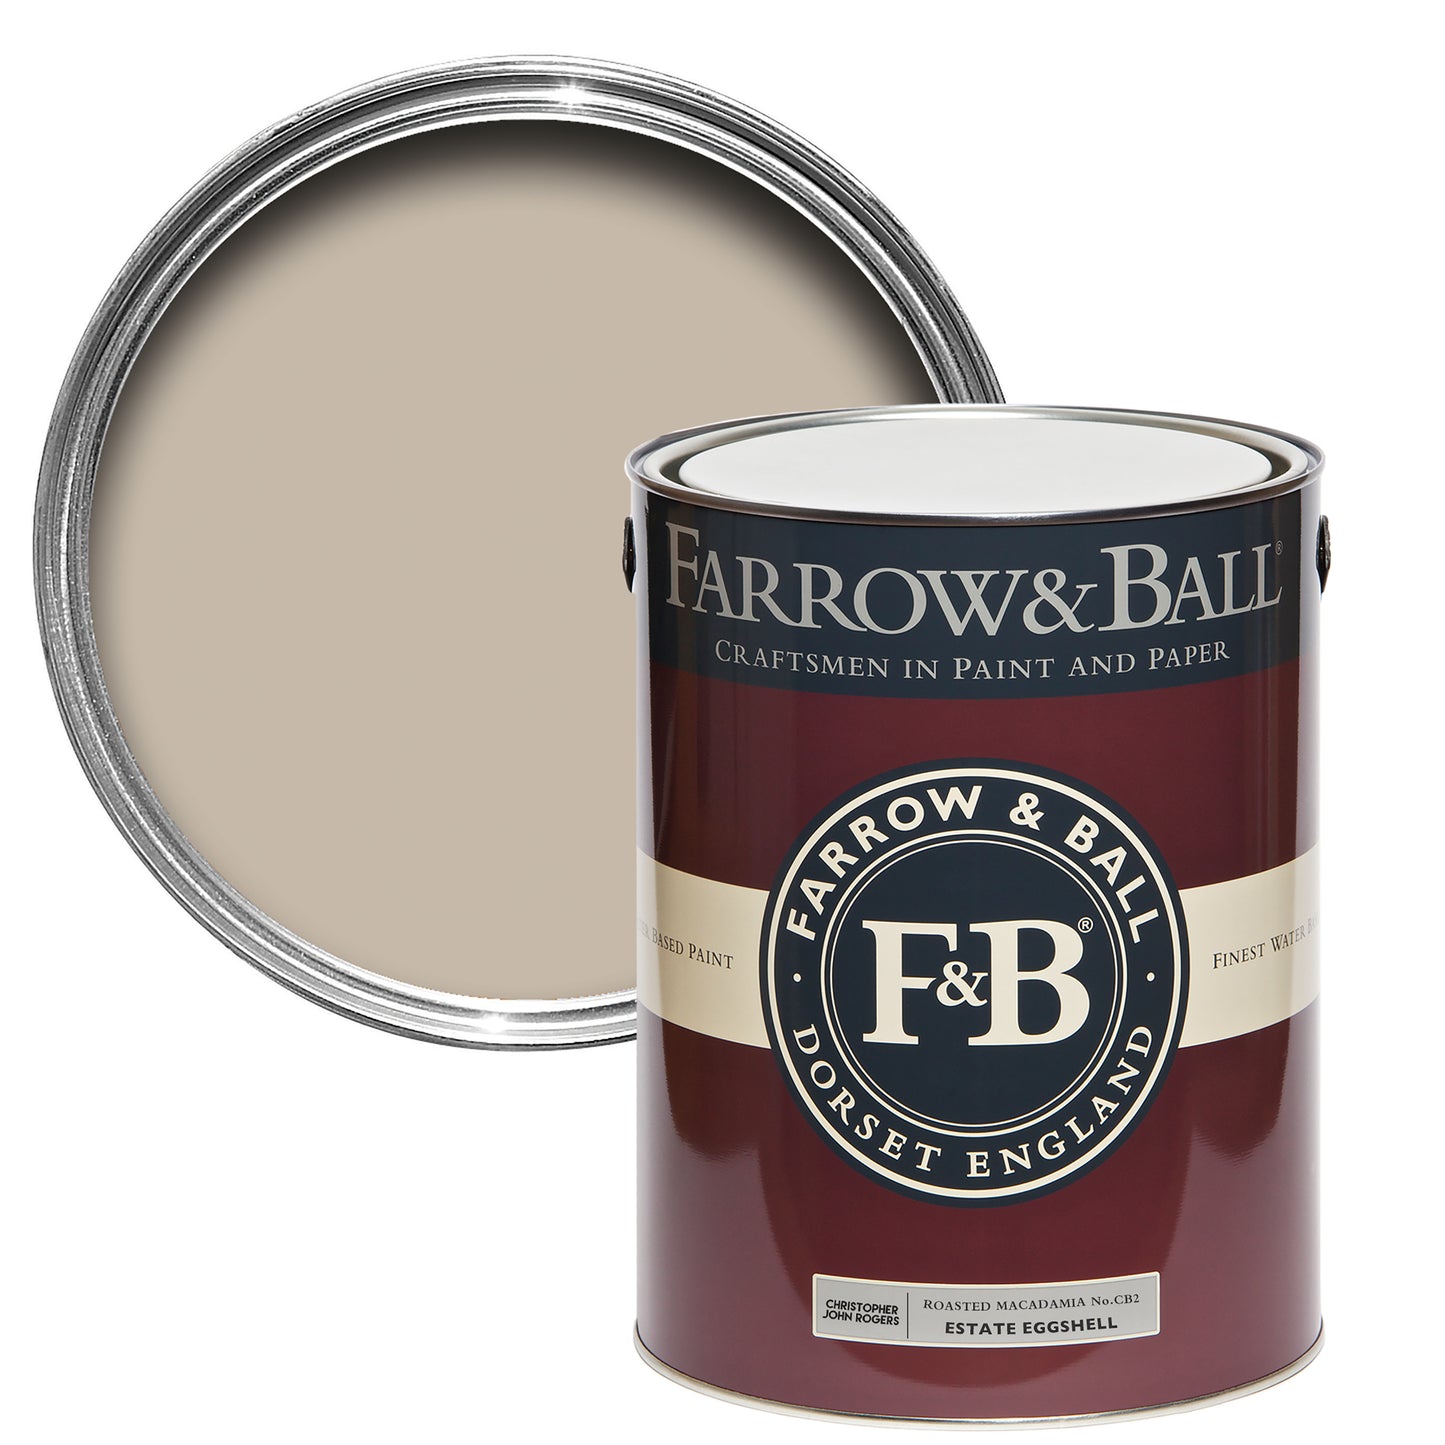 Lack - Farrow and Ball - Roasted Macadamia No.CB2 - Carte Blanche